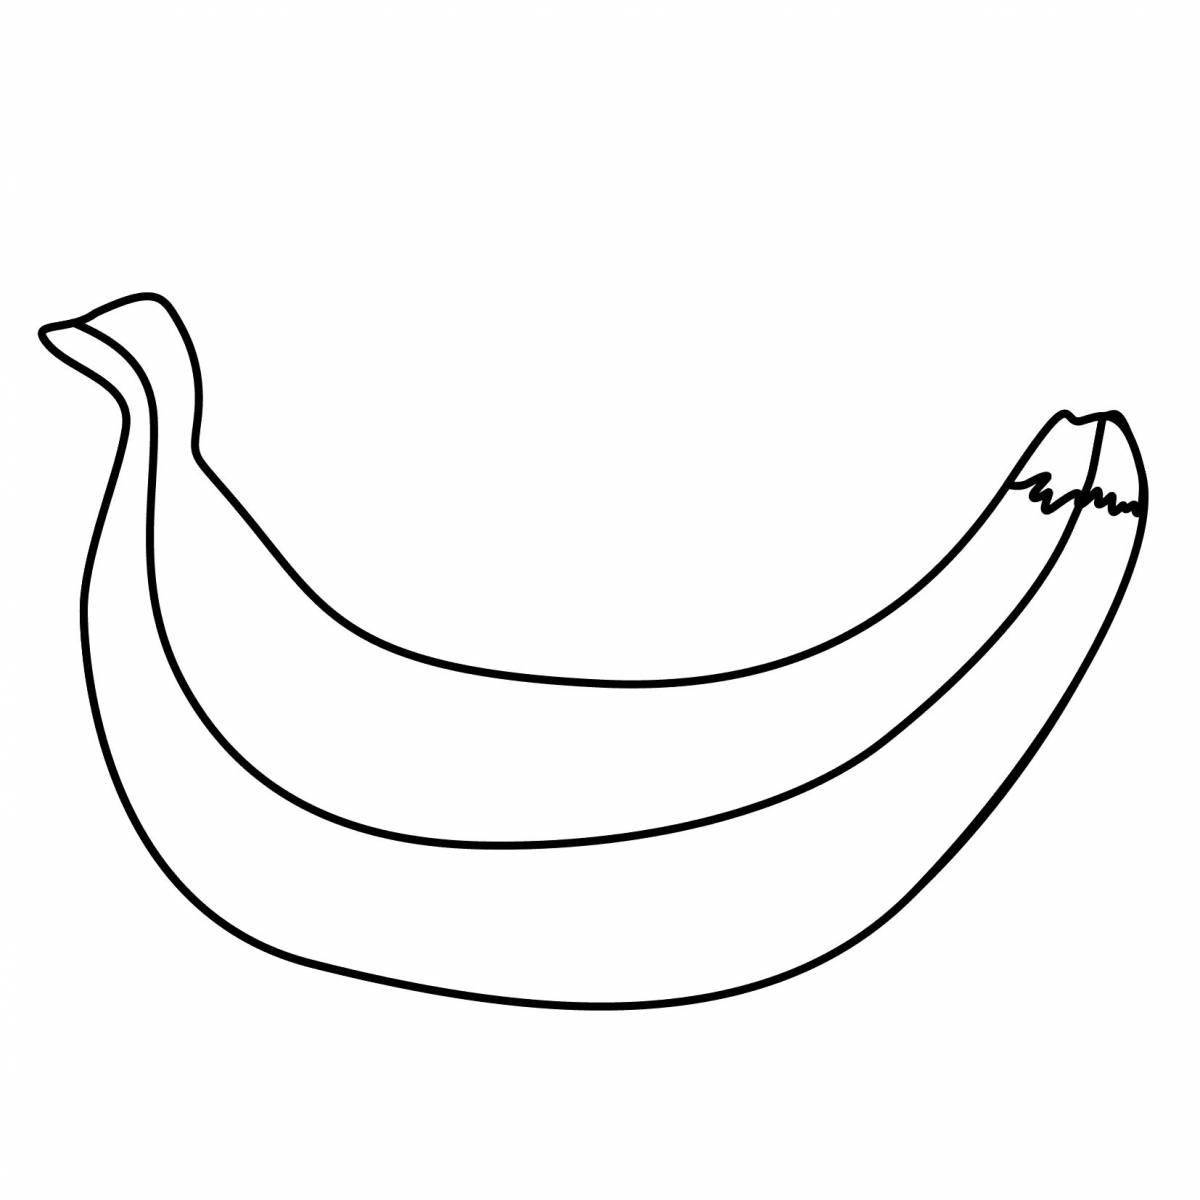 Живой рисунок банана